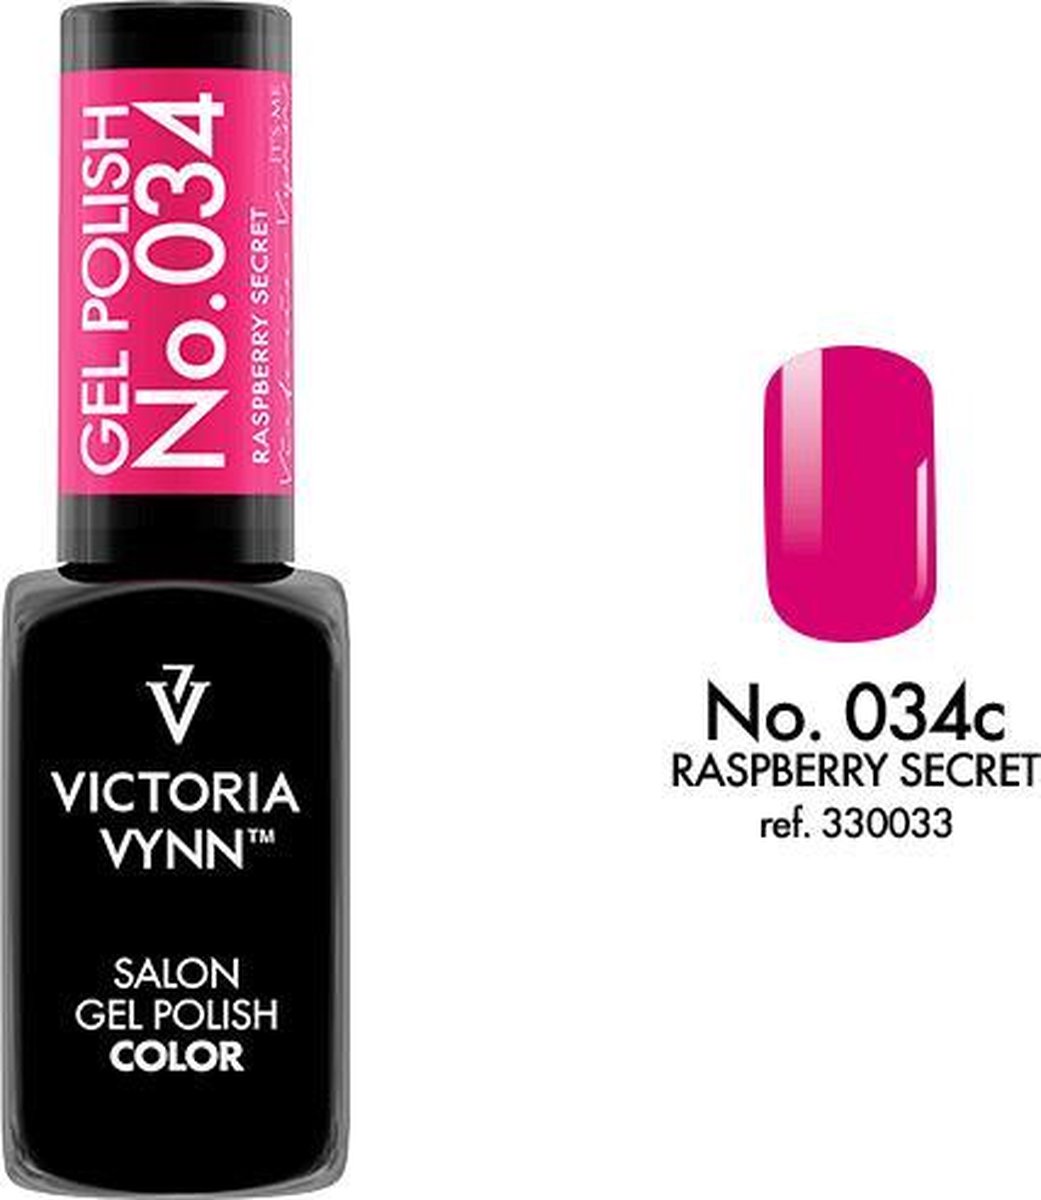 Gellak Victoria Vynn™ Gel Nagellak - Salon Gel Polish Color 034 - 8 ml. - Raspberry Secret